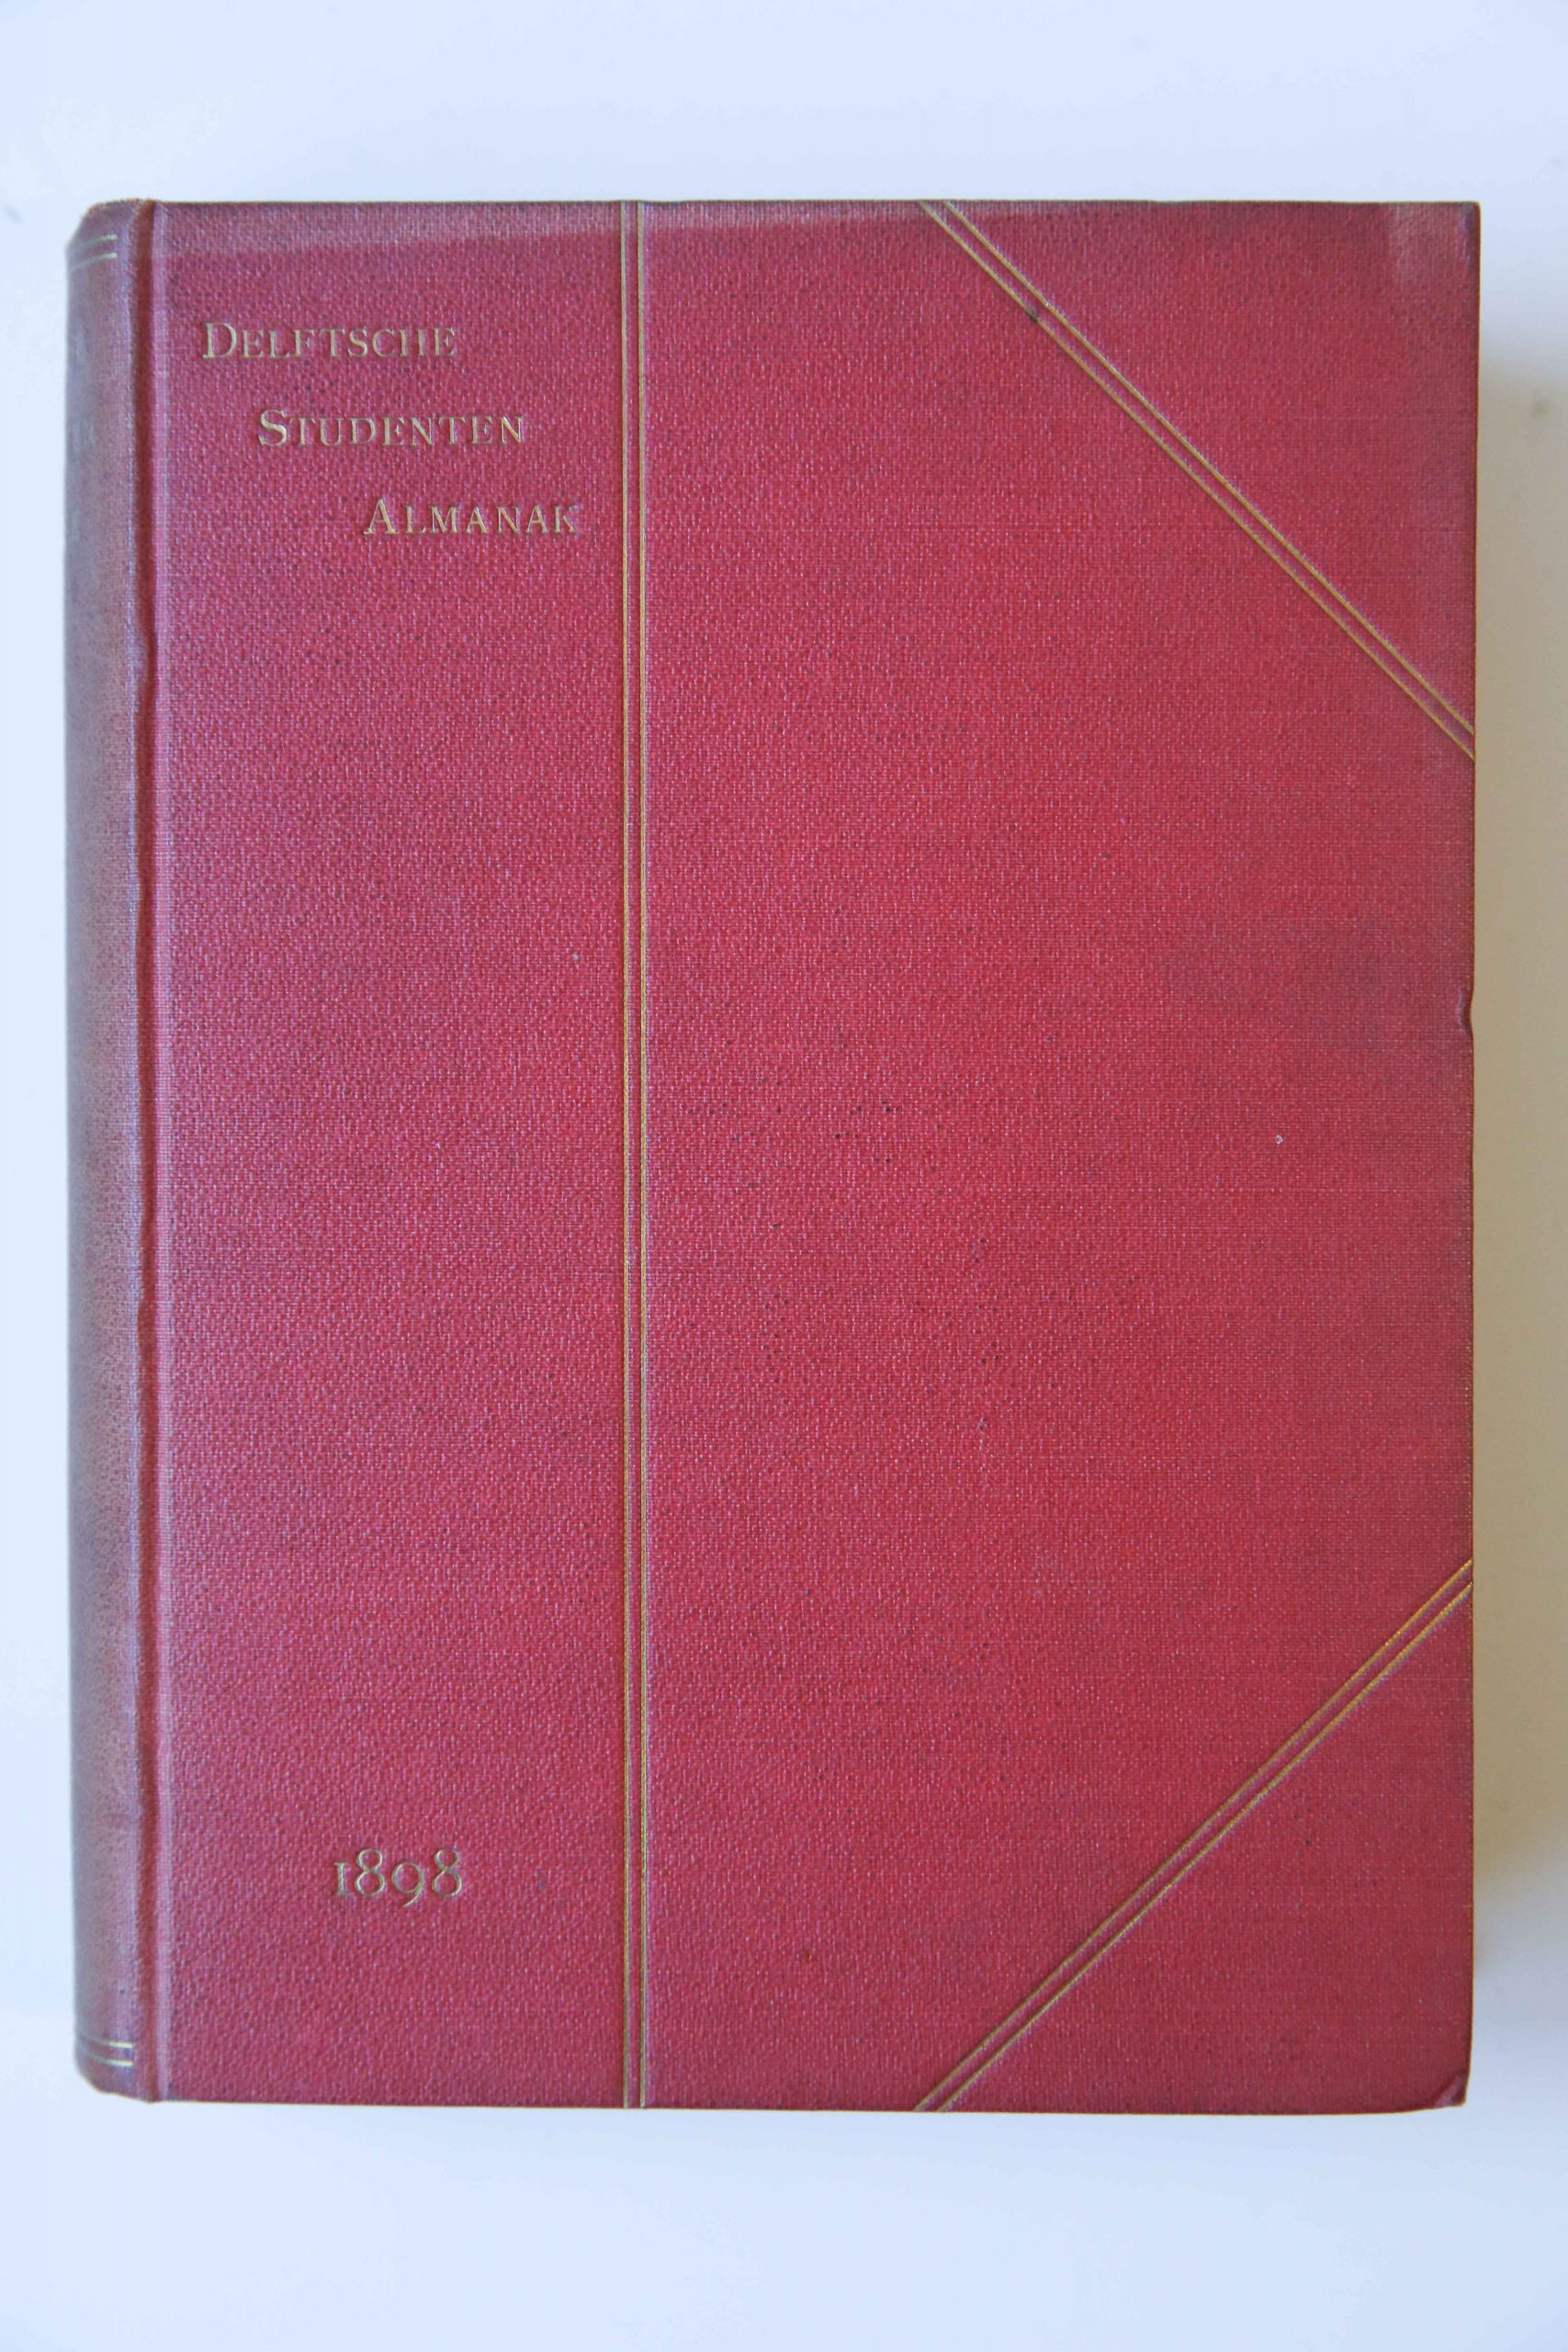 Delftsche Studenten-Almanak 1898, J. Waltman jr. Delft 1989, 449 pp.